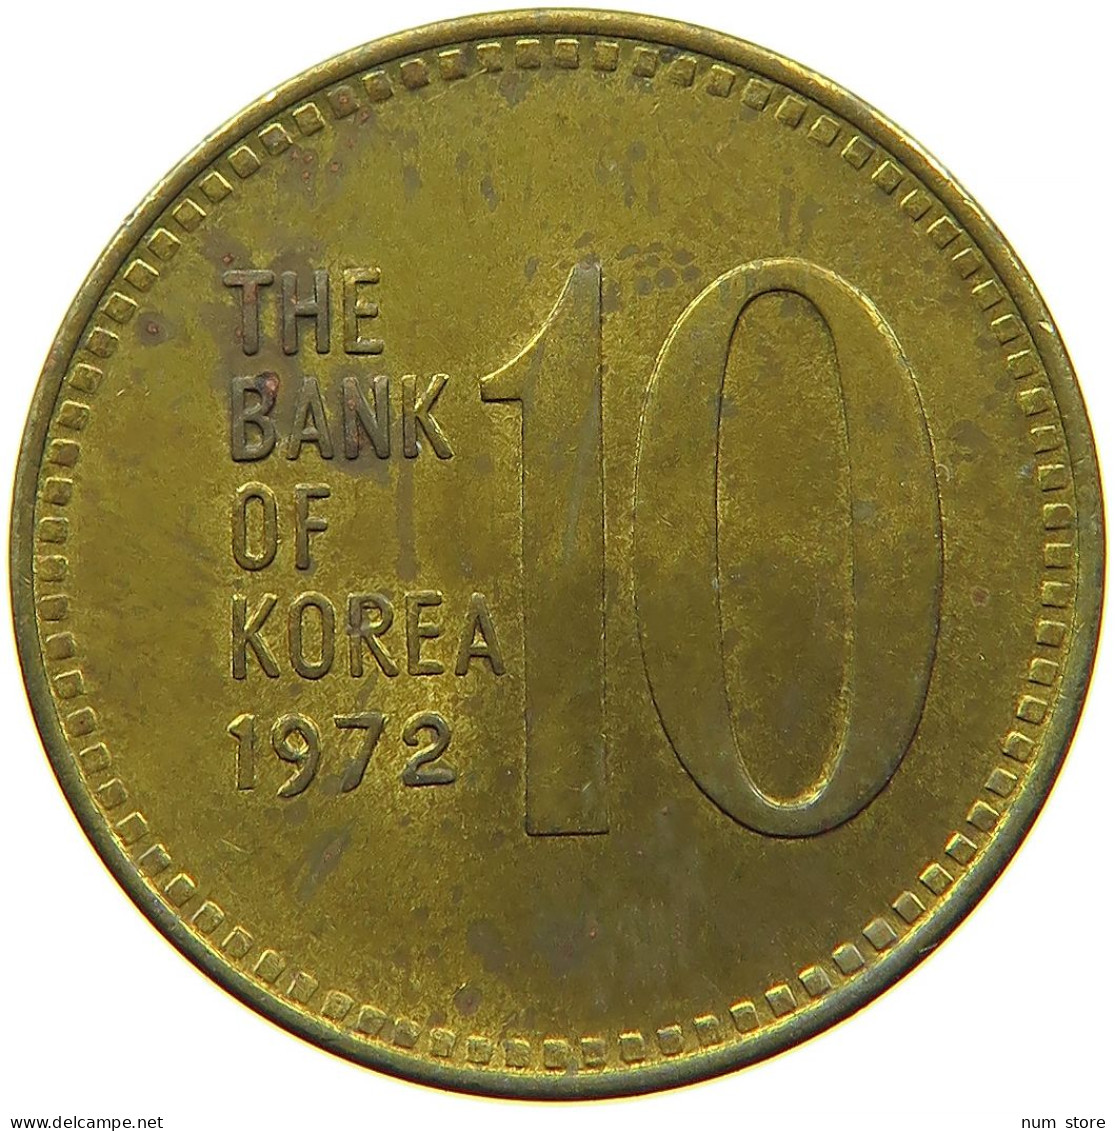 KOREA SOUTH 10 WON 1972 #s089 0099 - Korea, South